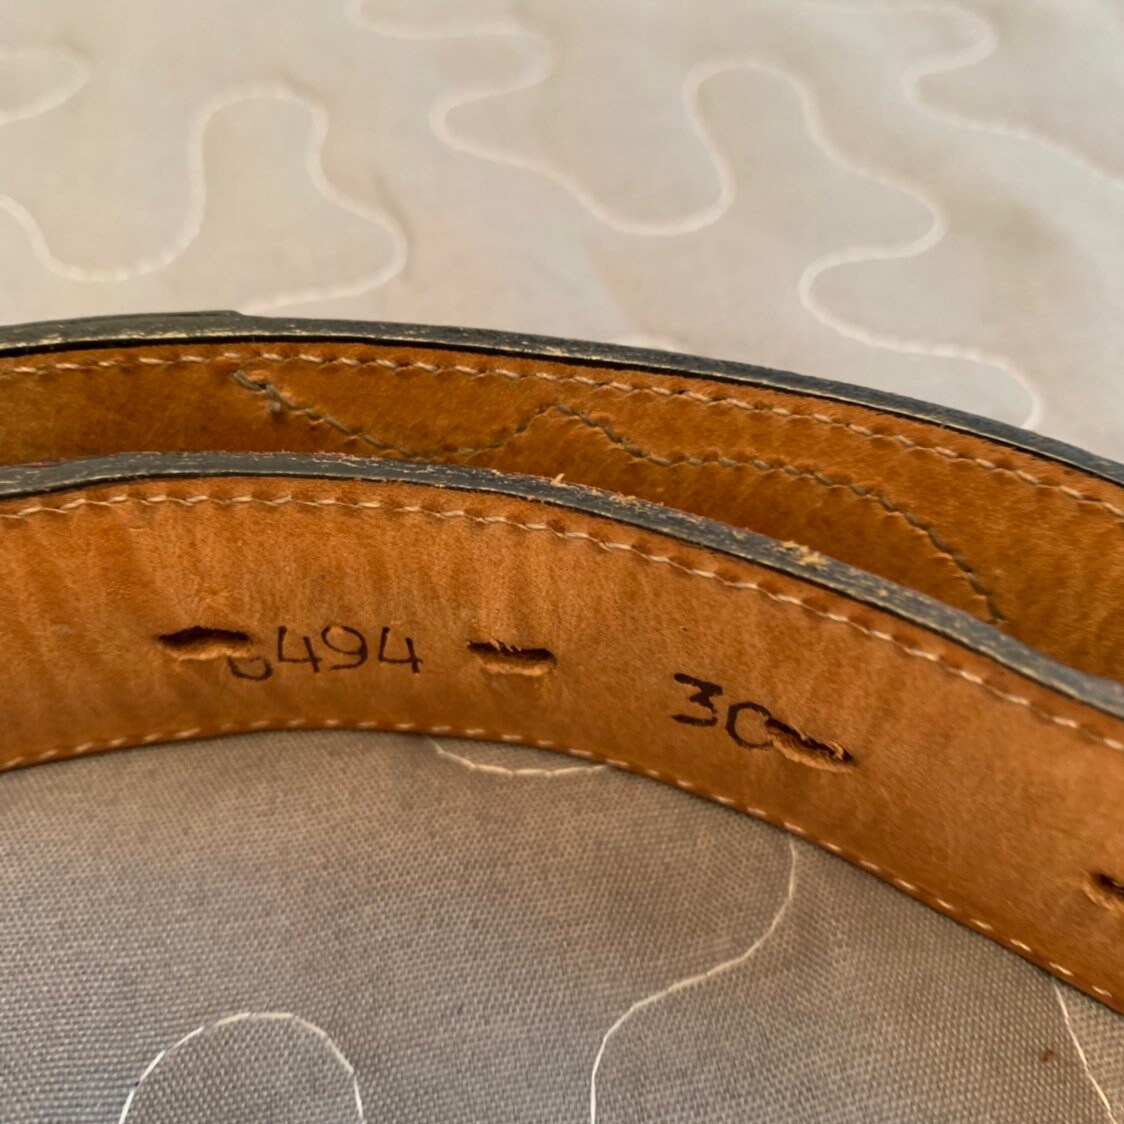 Texas leather belt | Etsy